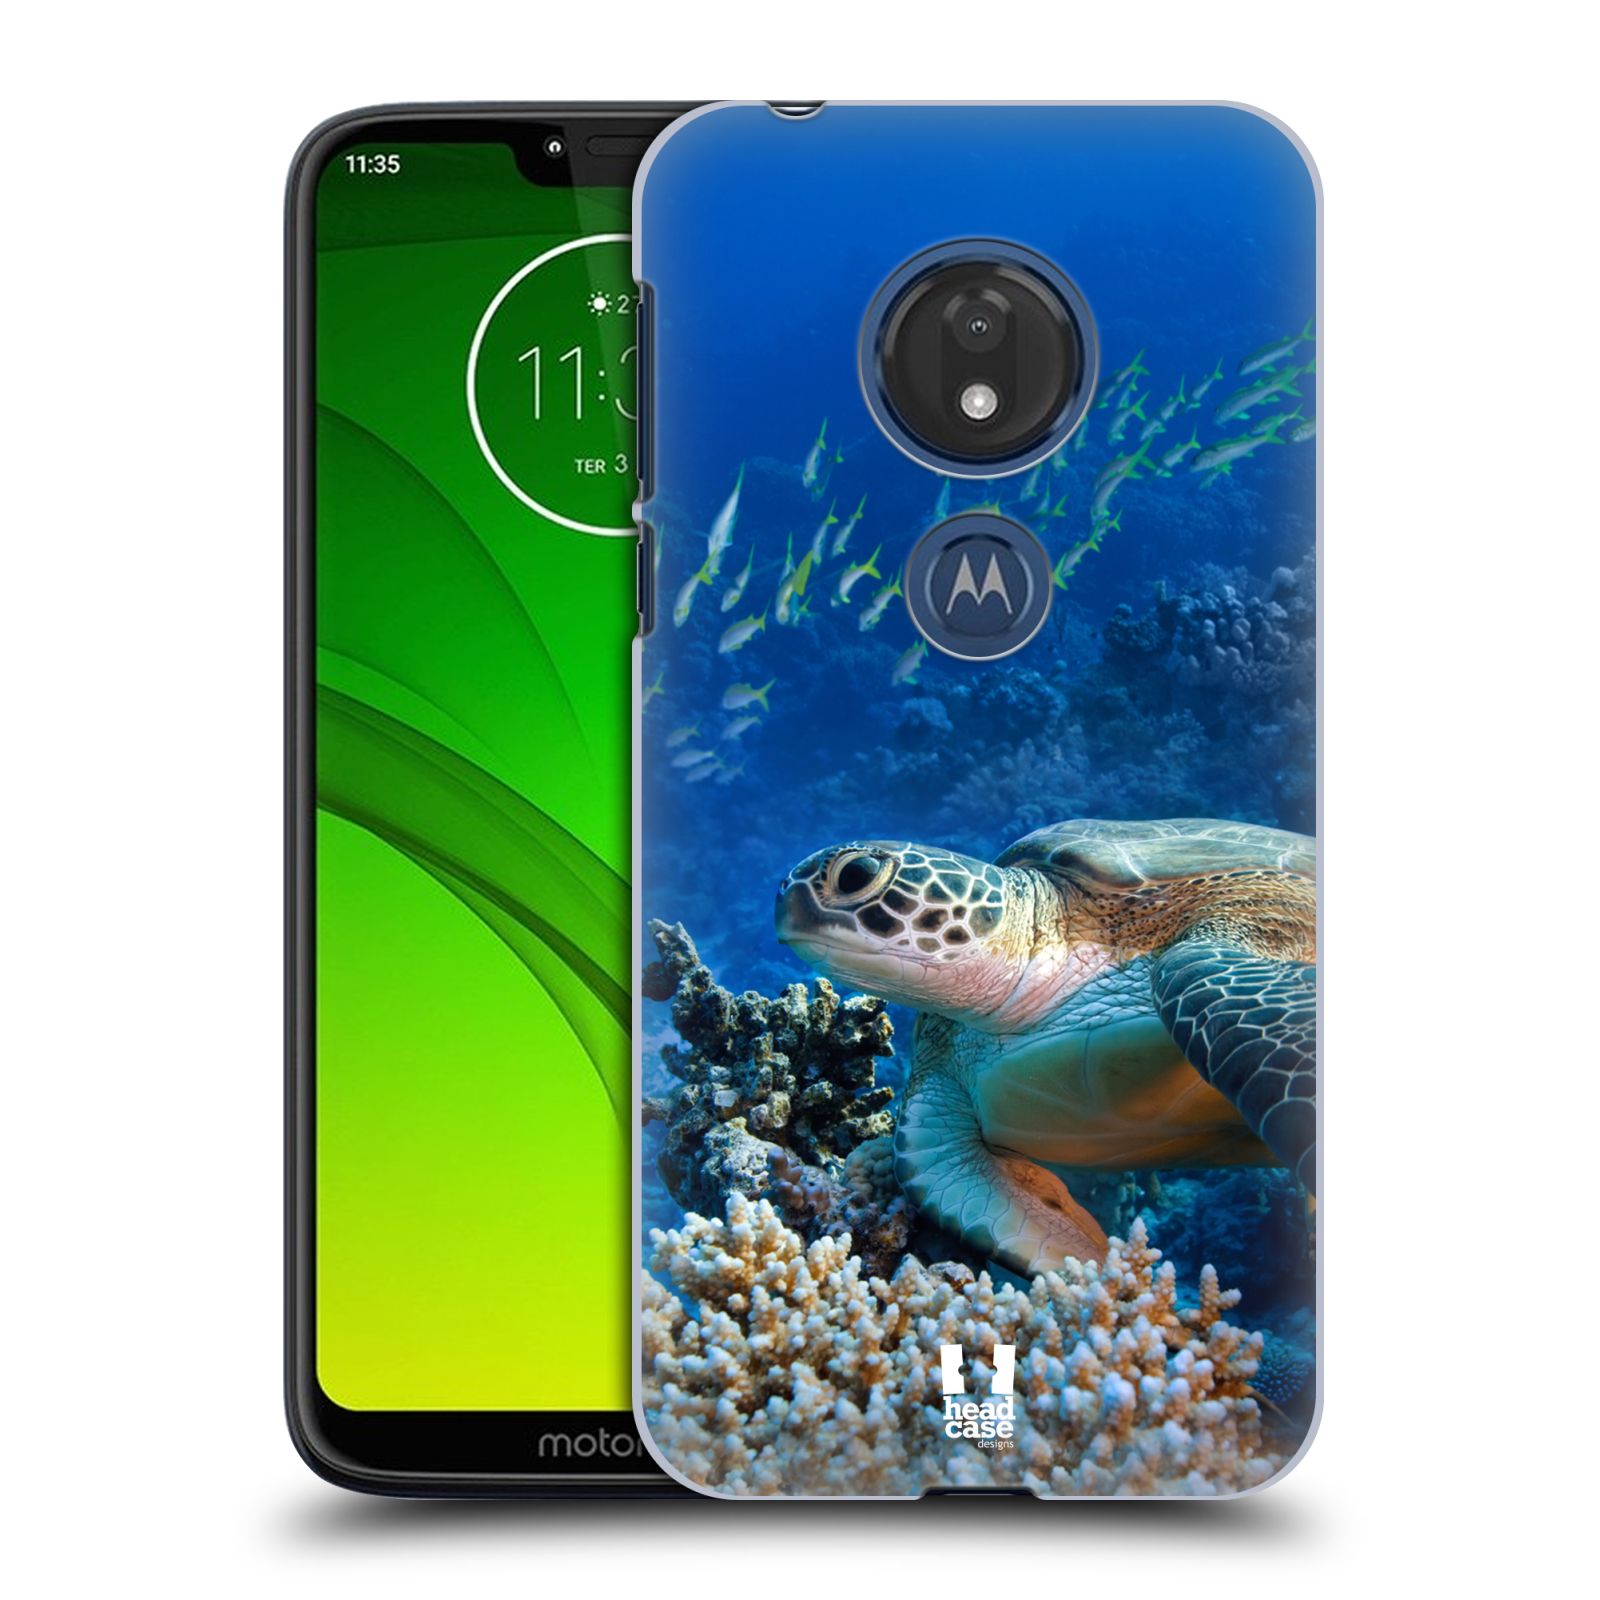 Pouzdro na mobil Motorola Moto G7 Play vzor Divočina, Divoký život a zvířata foto MOŘSKÁ ŽELVA MODRÁ PODMOŘSKÁ HLADINA